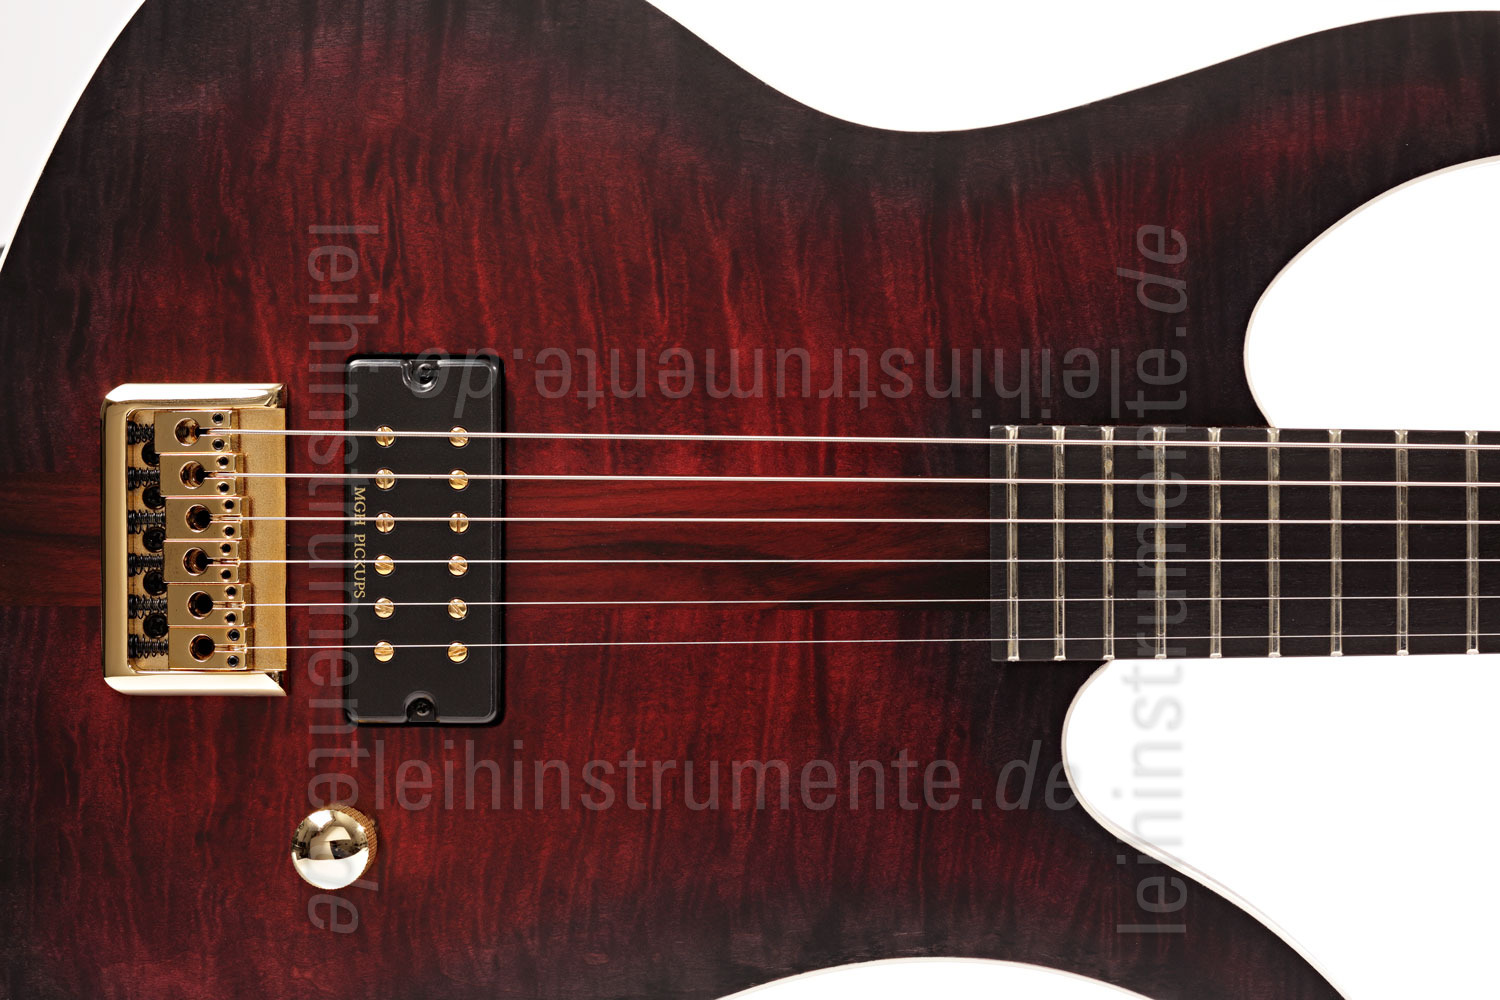 zur Artikelbeschreibung / Preis E-Gitarre MGH GUITARS Blizzard Beast Premium Deluxe - black cherry burst + Softcase - made in Germany